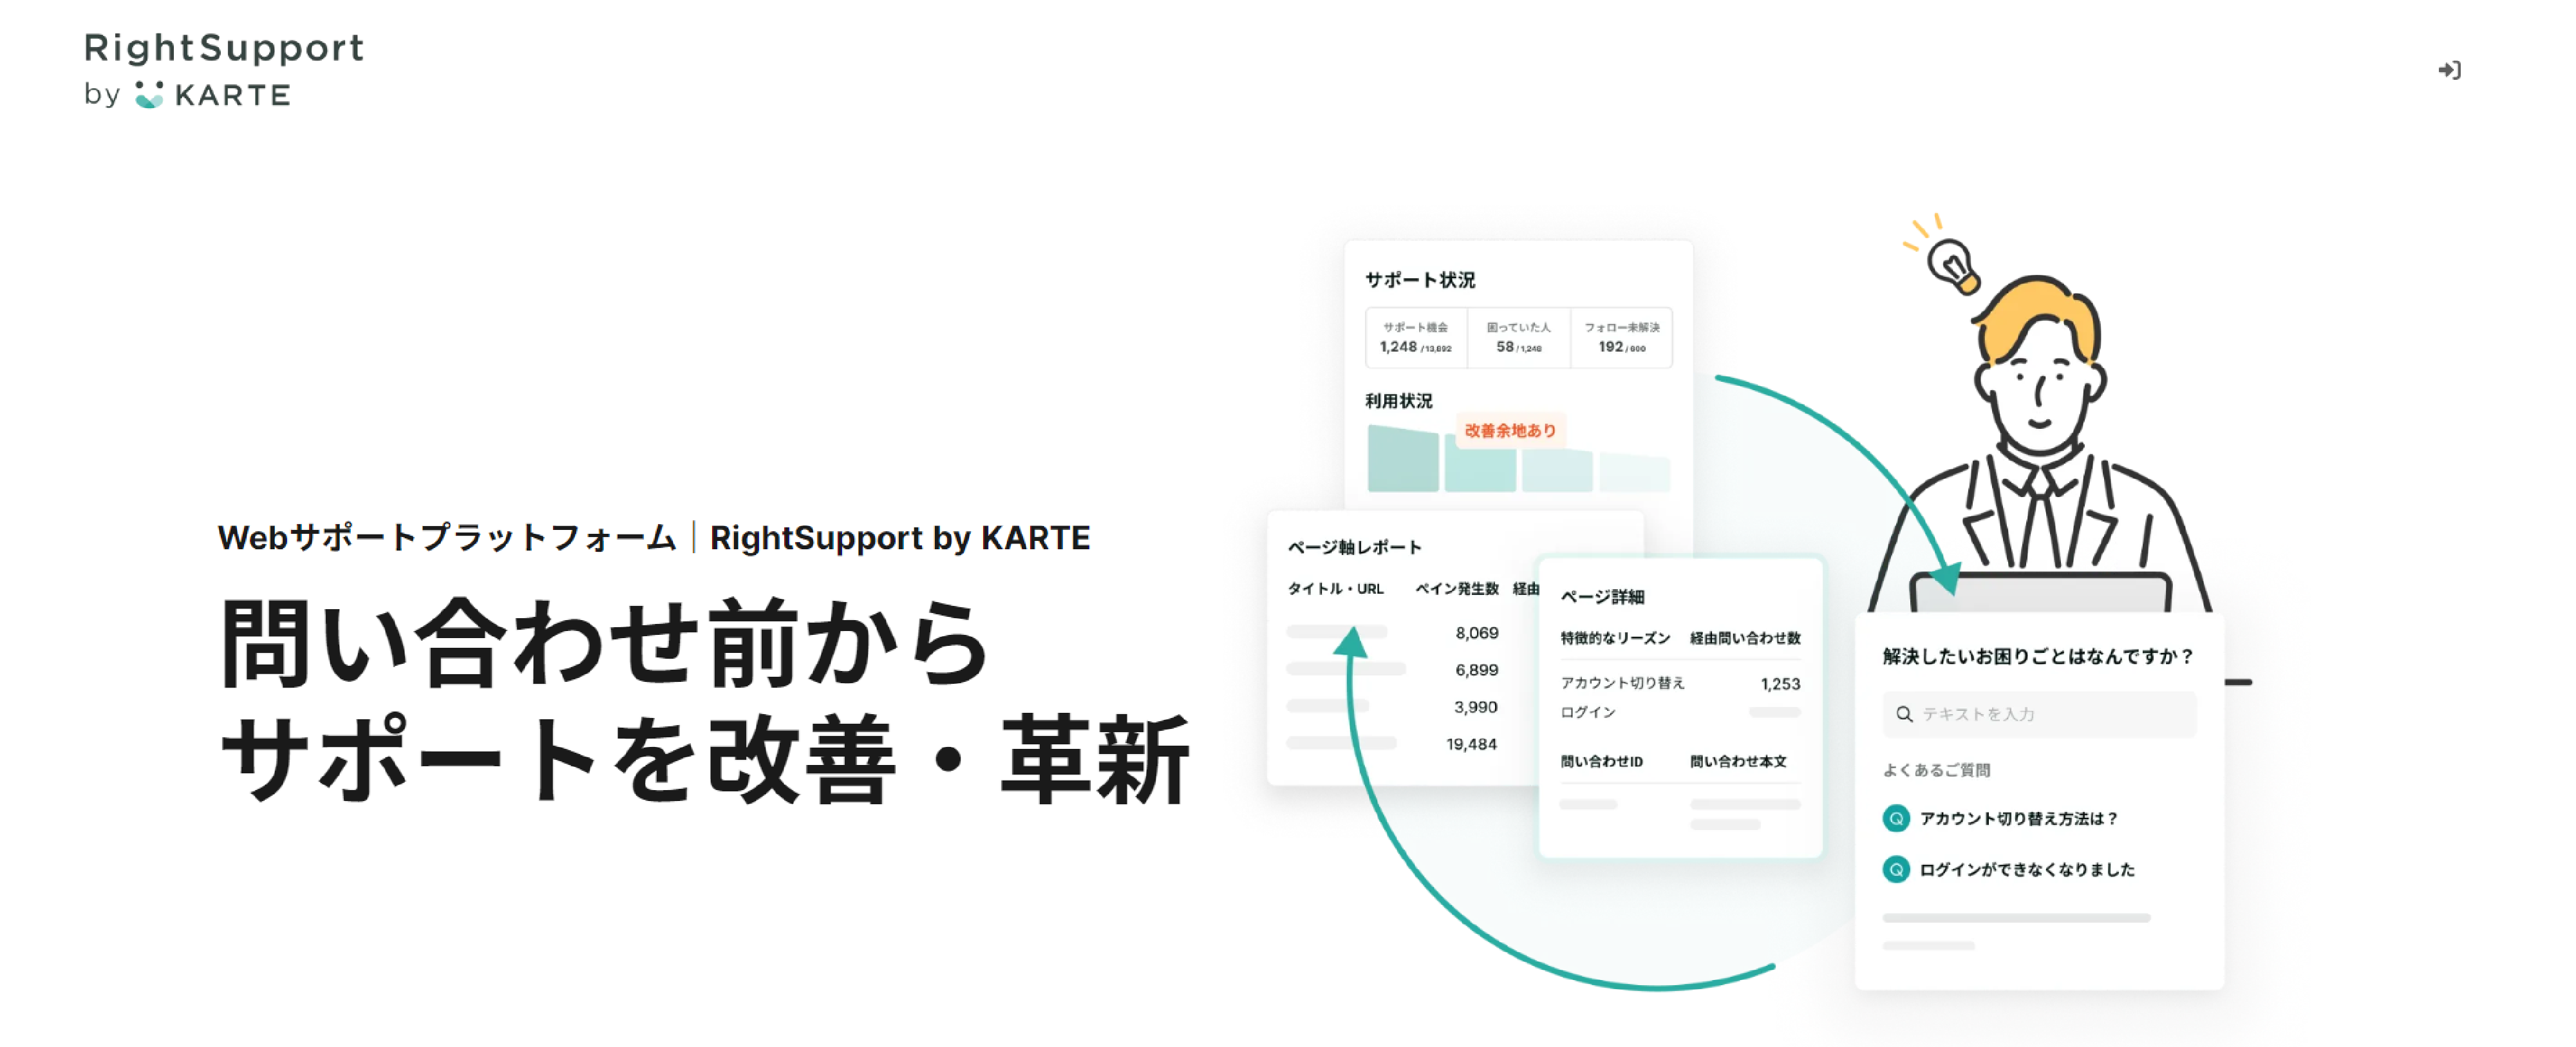 「RightSupport by KARTE」の製品サイトファーストビュー